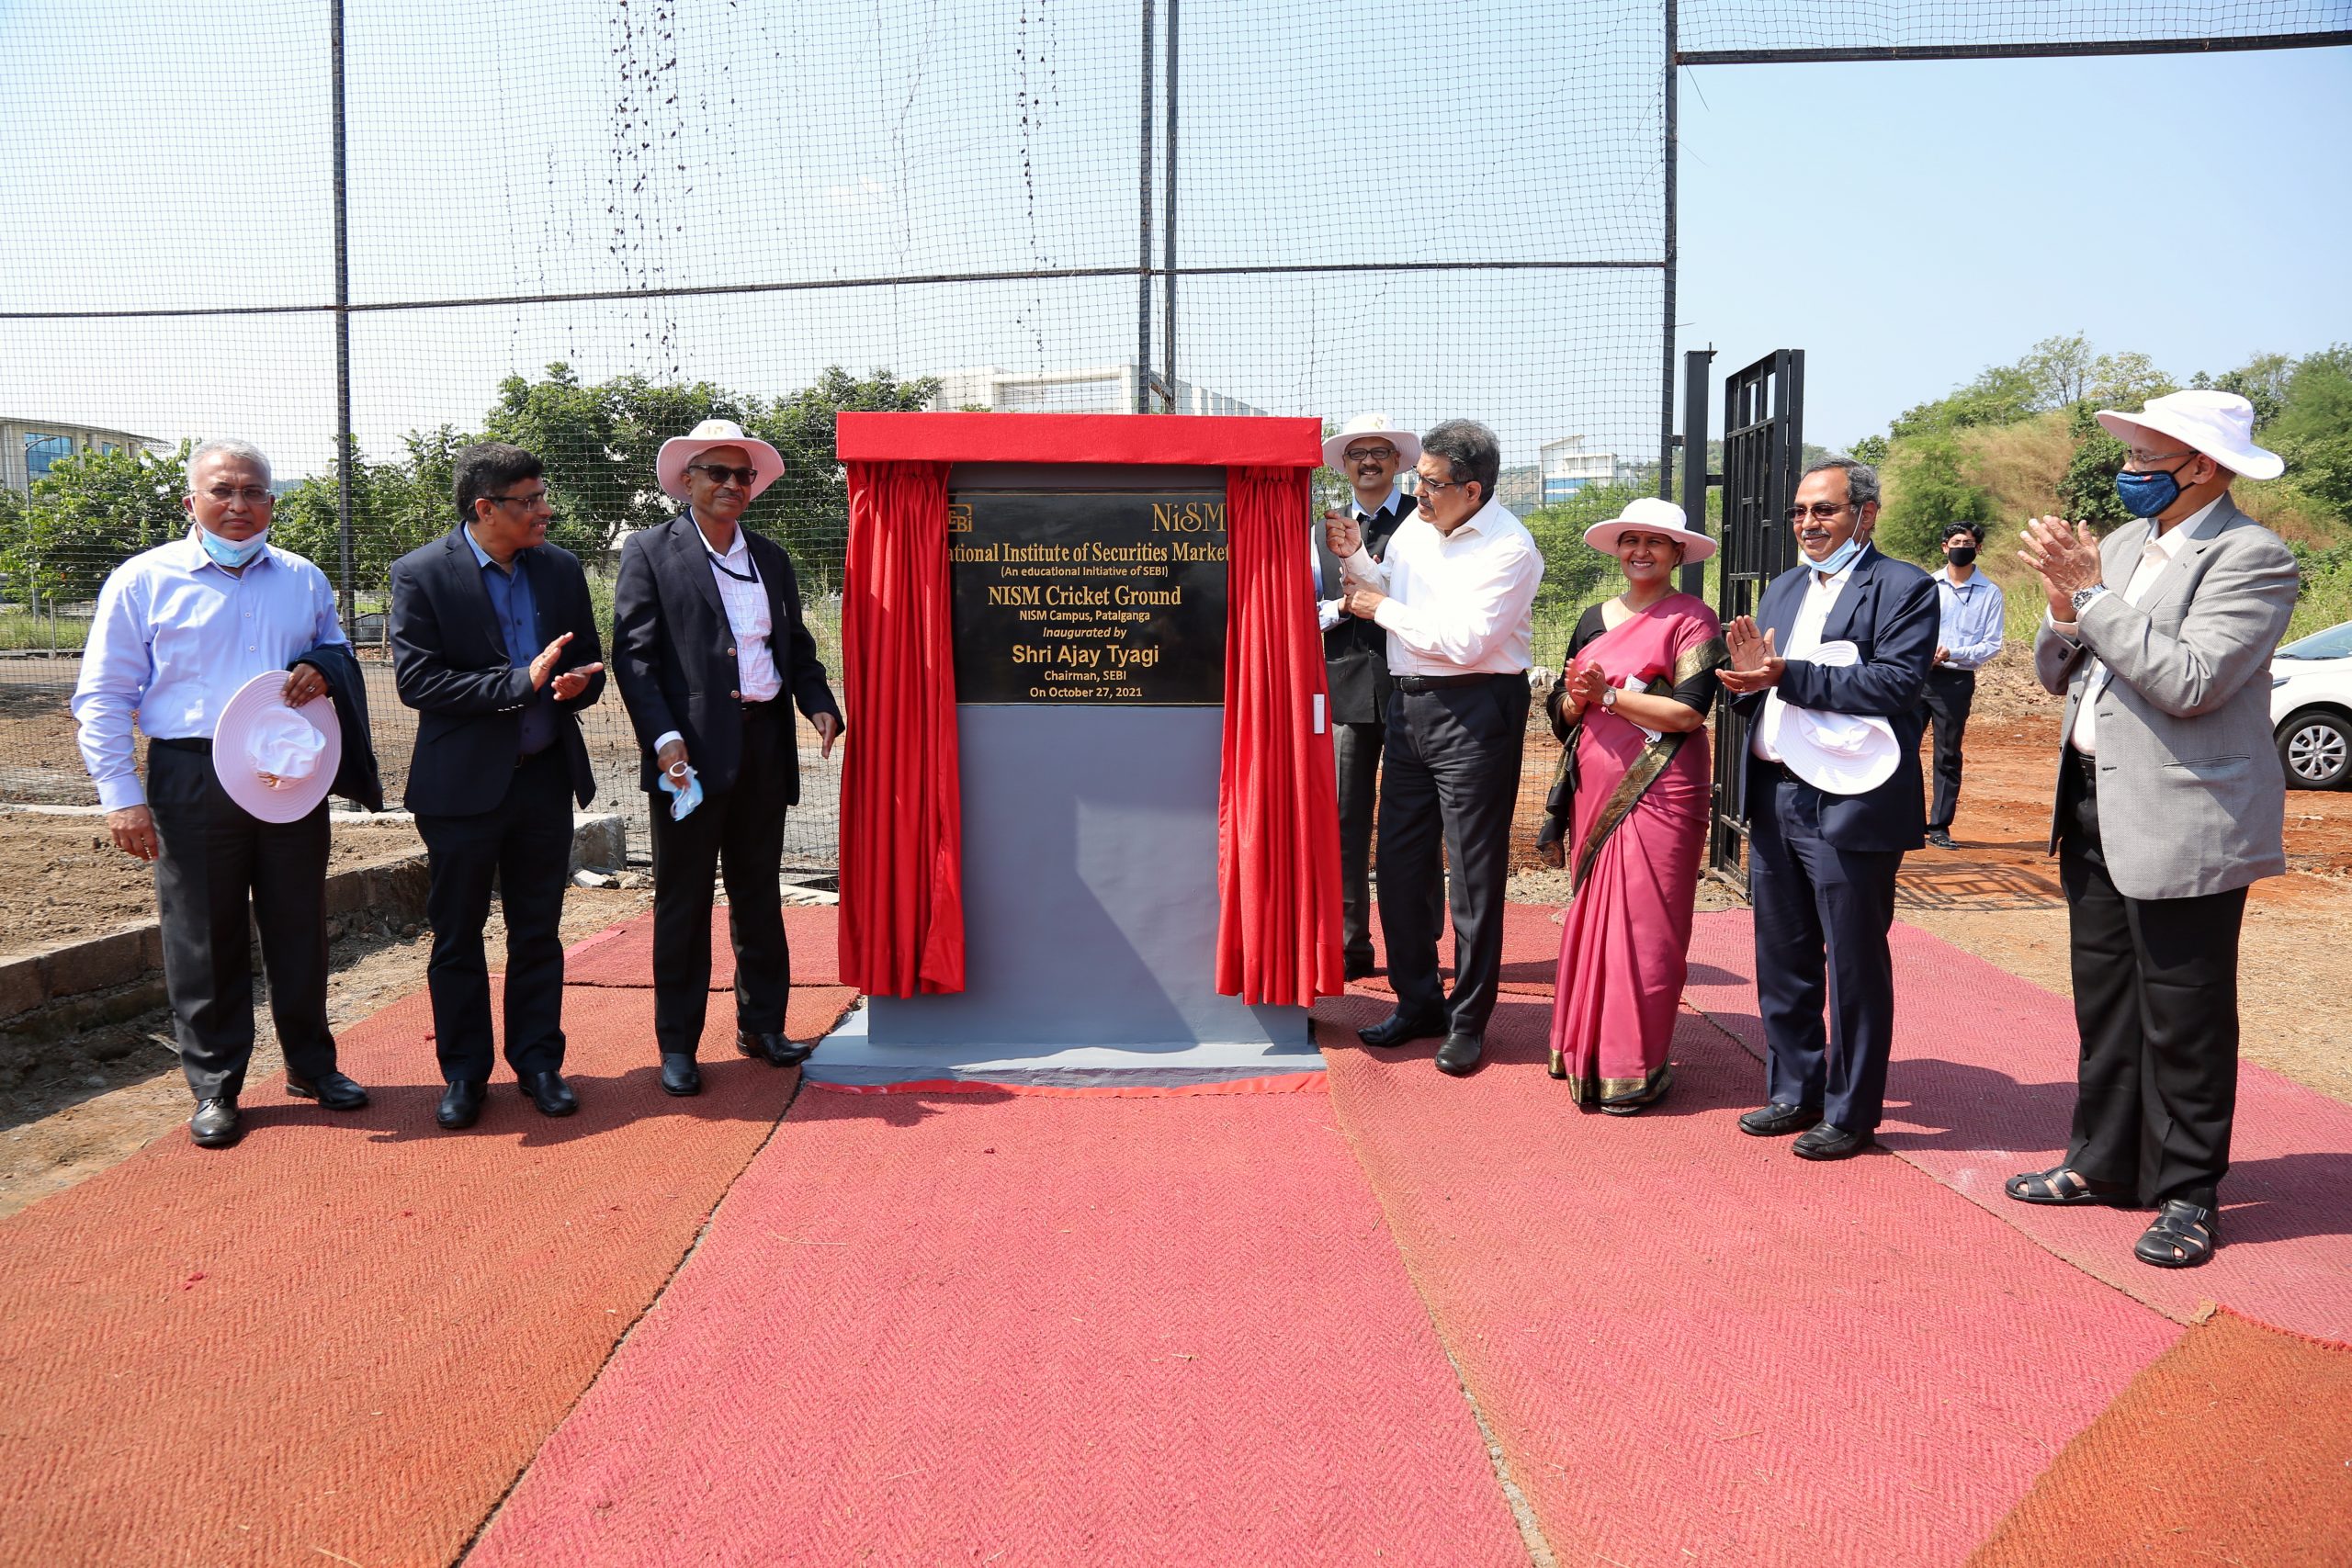 Inauguration of NISM Cricket ground by Shri Ajay Tyagi, Chairman, SEBI